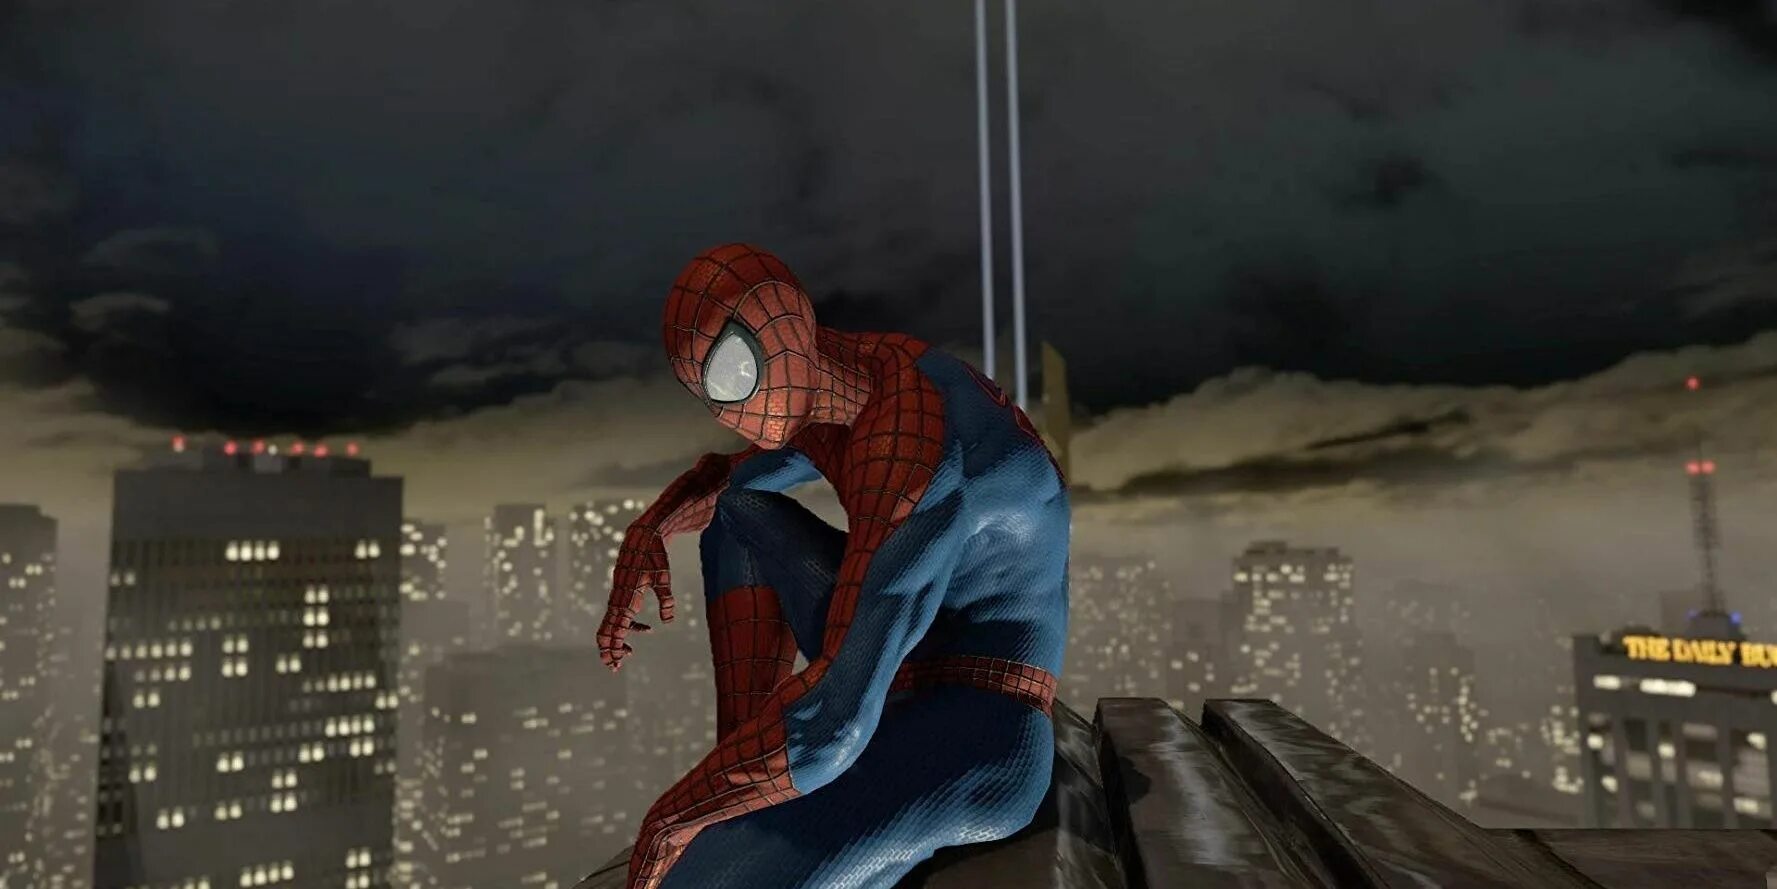 Игры 2014 февраль. The amazing Spider-man (игра, 2012). The amazing Spider-man 2 (игра, 2014). Человек паук амазинг 2 игра. Spider man 2014 игра.